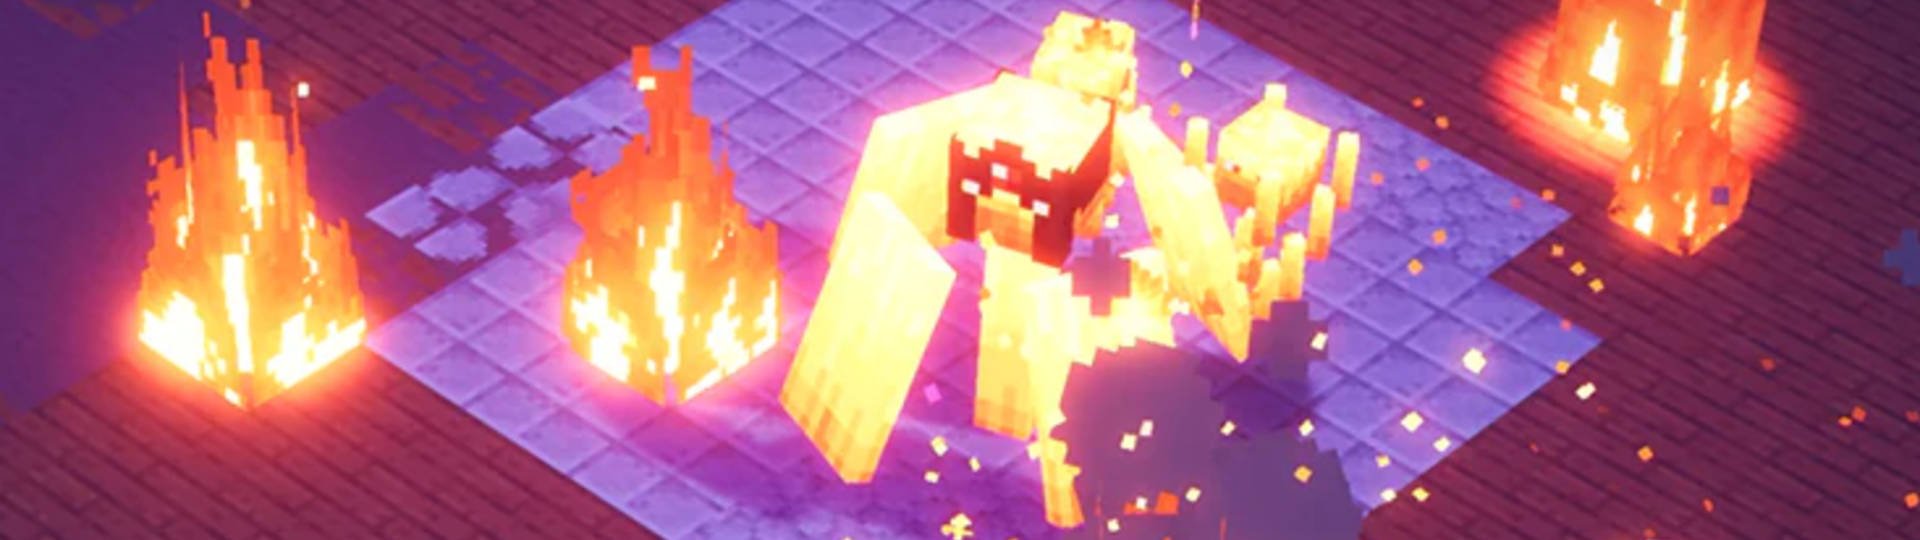 Minecraft Dungeons Wildfire Mob slice